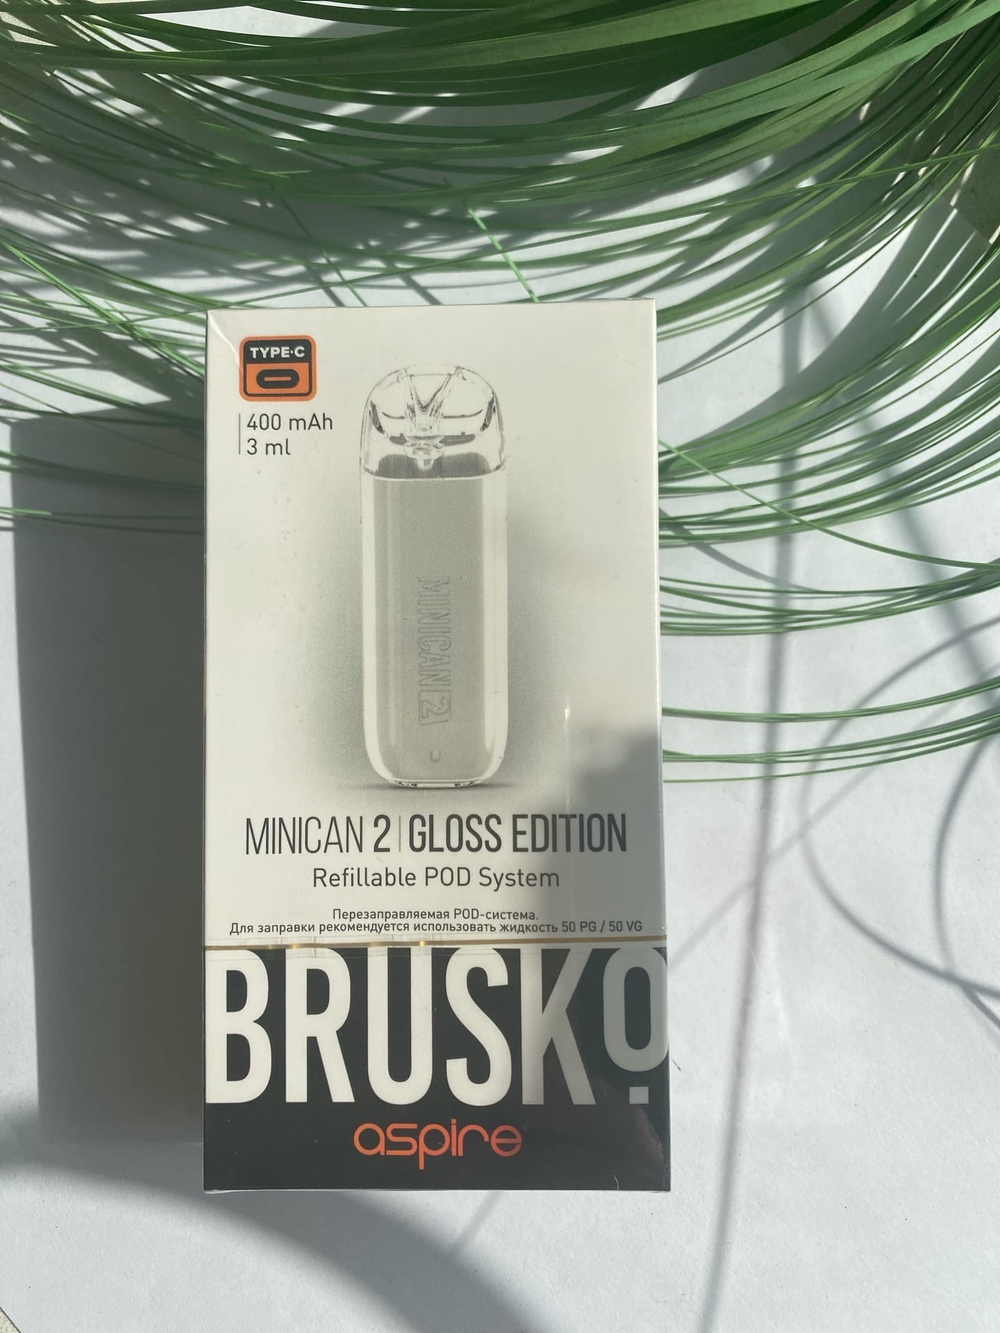 Набор MINICAN 2 Gloss Edition pod by Brusko 400мАч 3мл